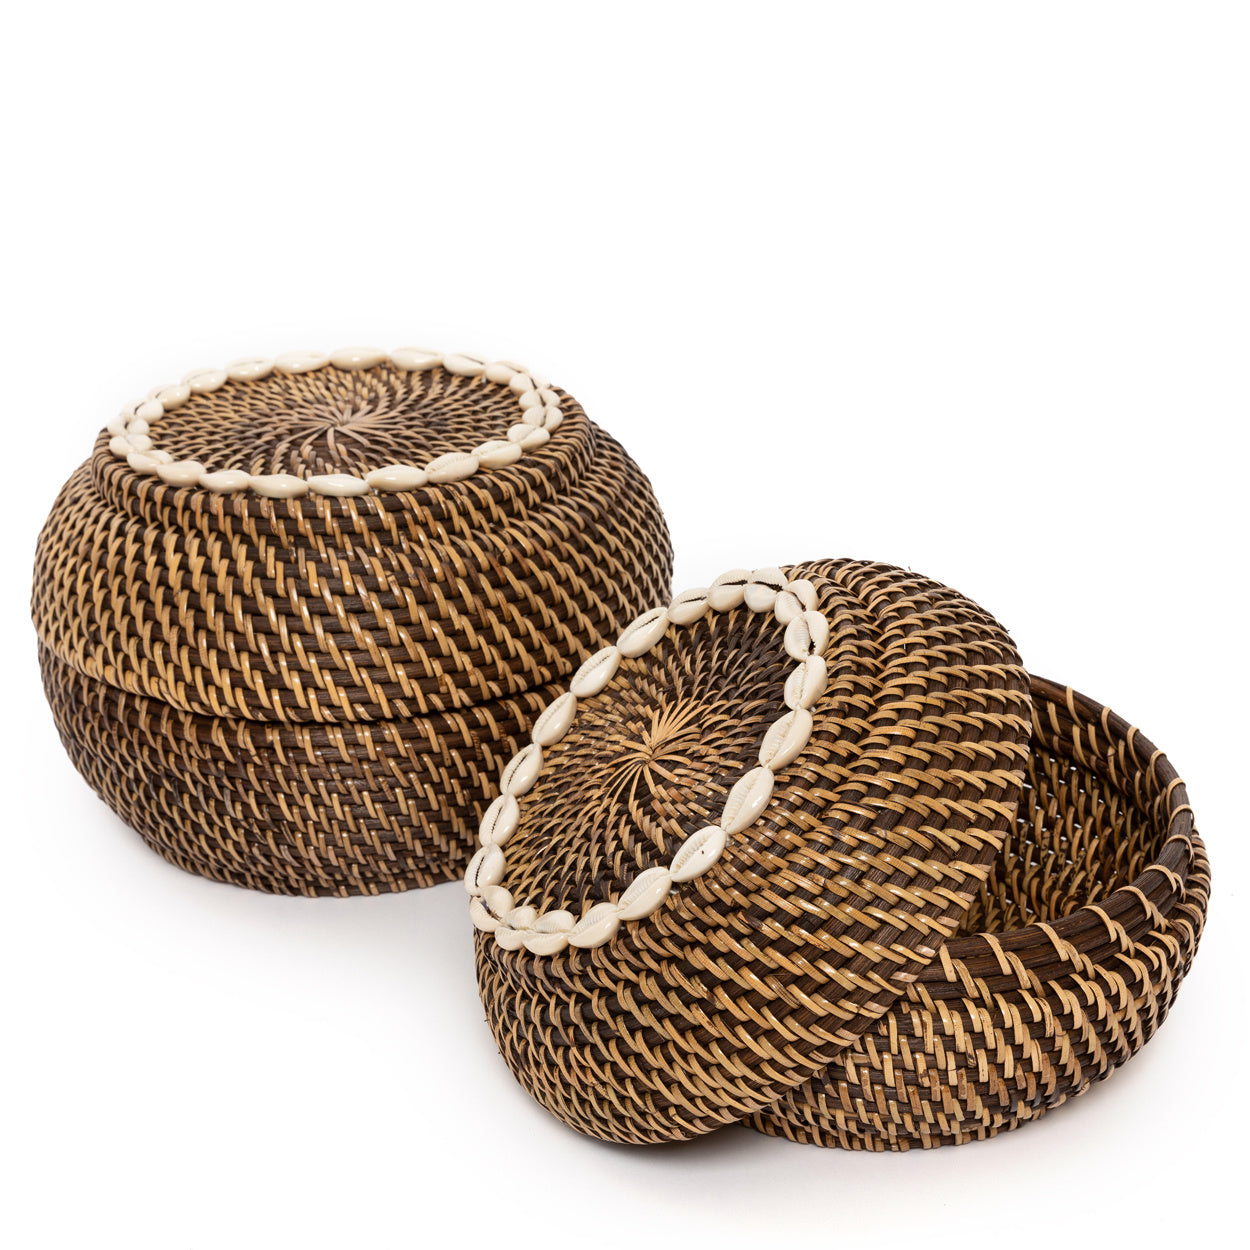 THE COLONIAL PEEK-A-BOO Baskets Natural Brown